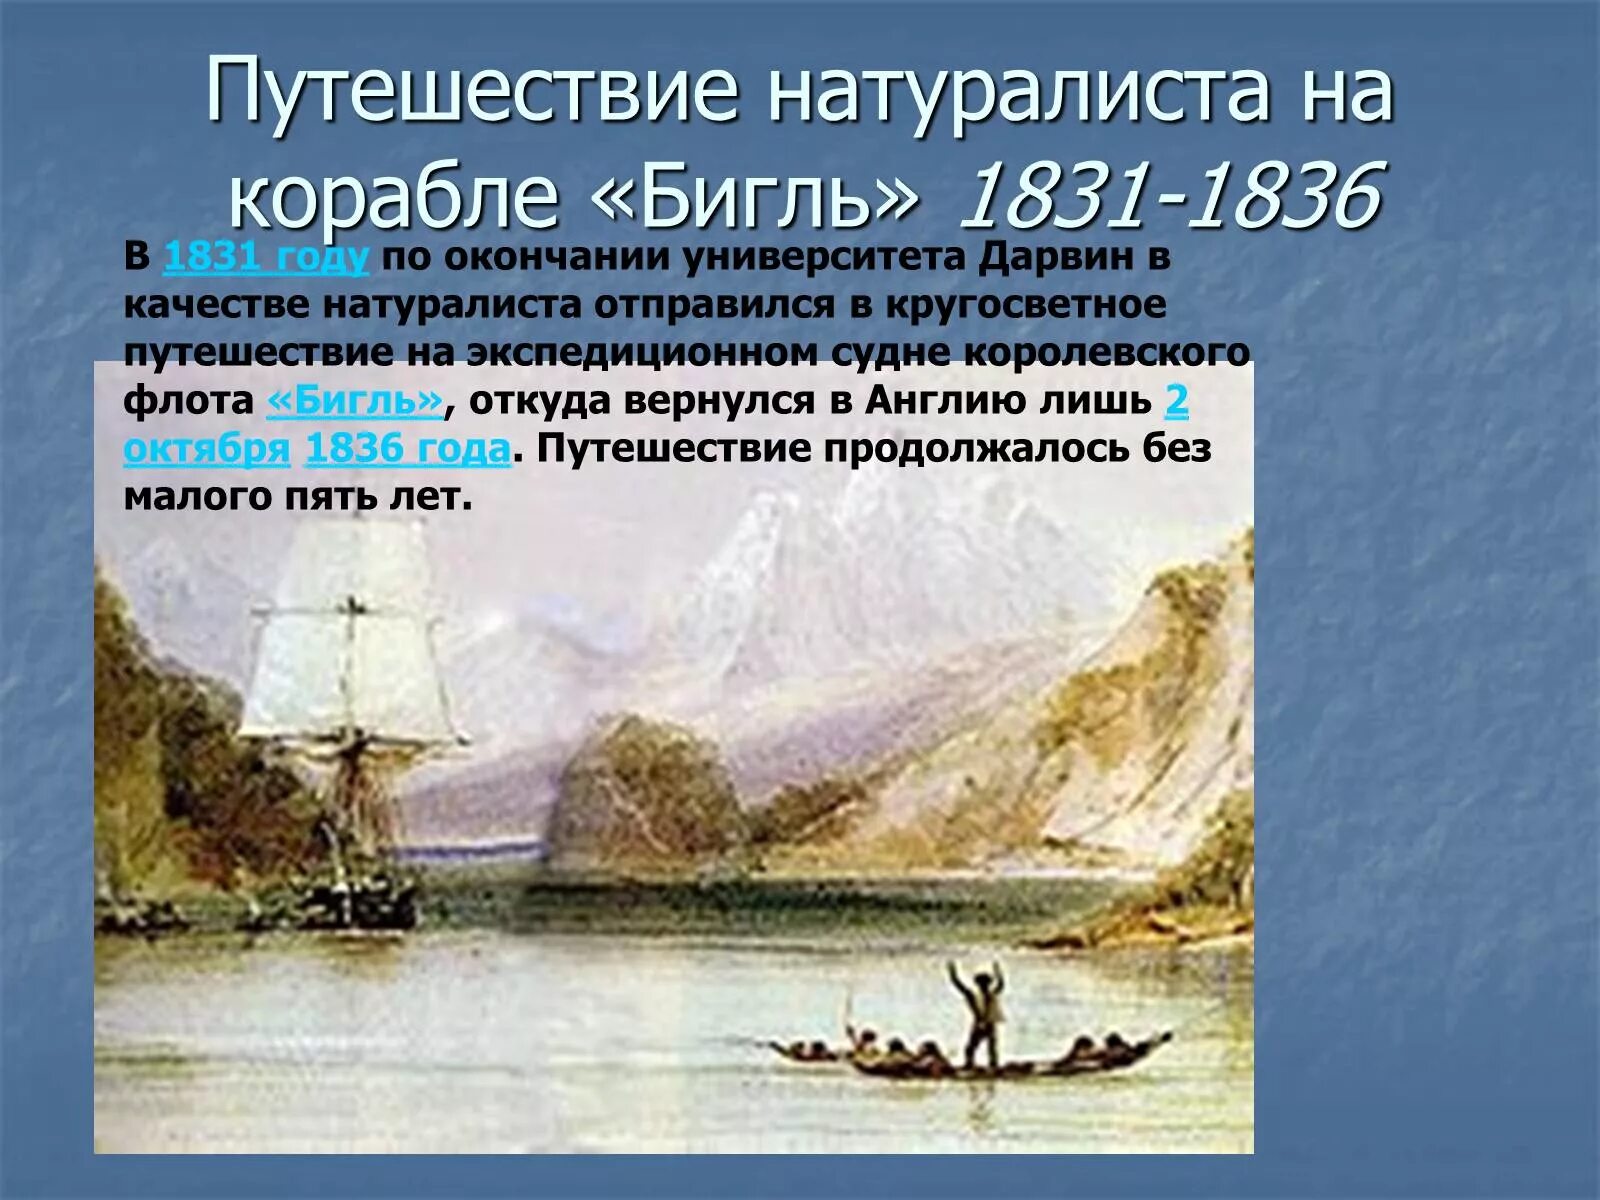 Путешествие натуралиста на корабле «Бигль» (1831—1836). Кругосветное путешествие Дарвина на корабле. Ч дарвин кругосветное путешествие